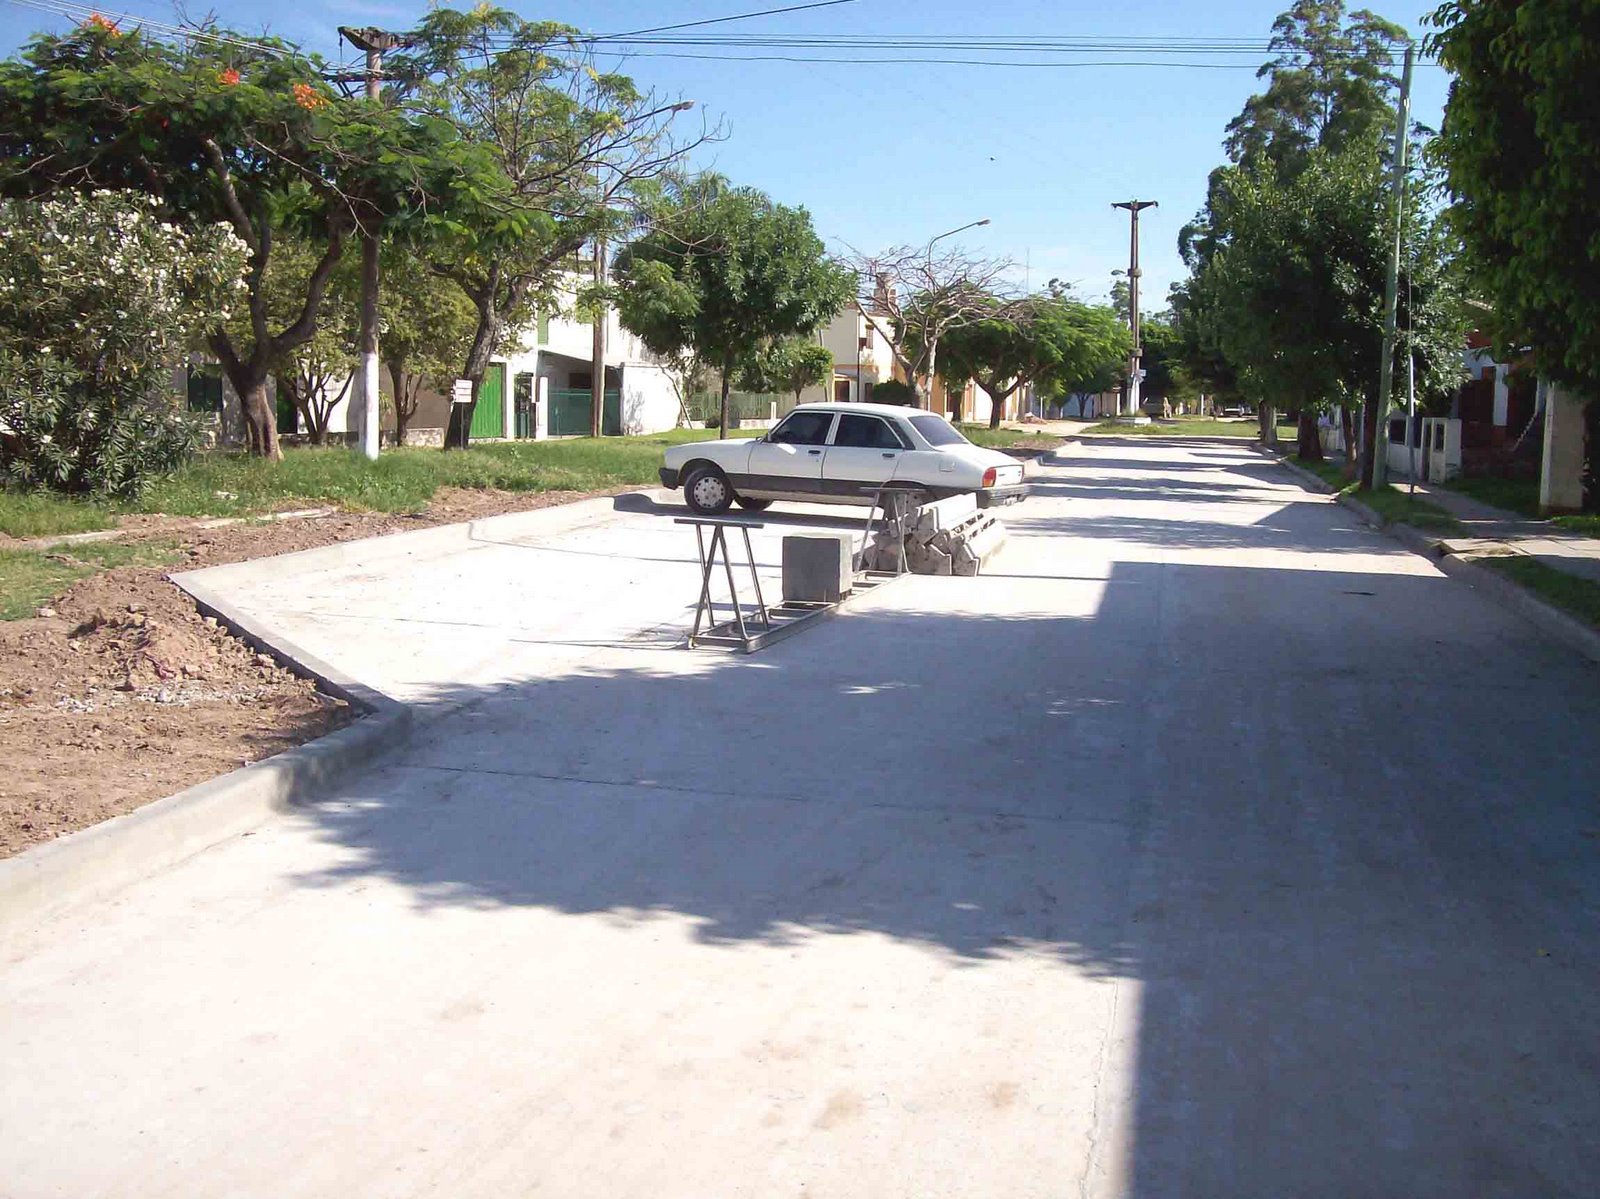 [pavimentacion+calle+Guatemala+en+barrio+Costa+de+las+Rosas-+vista+de+la+arteria+con+darsena+estacionamiento+pavimentada.jpg]